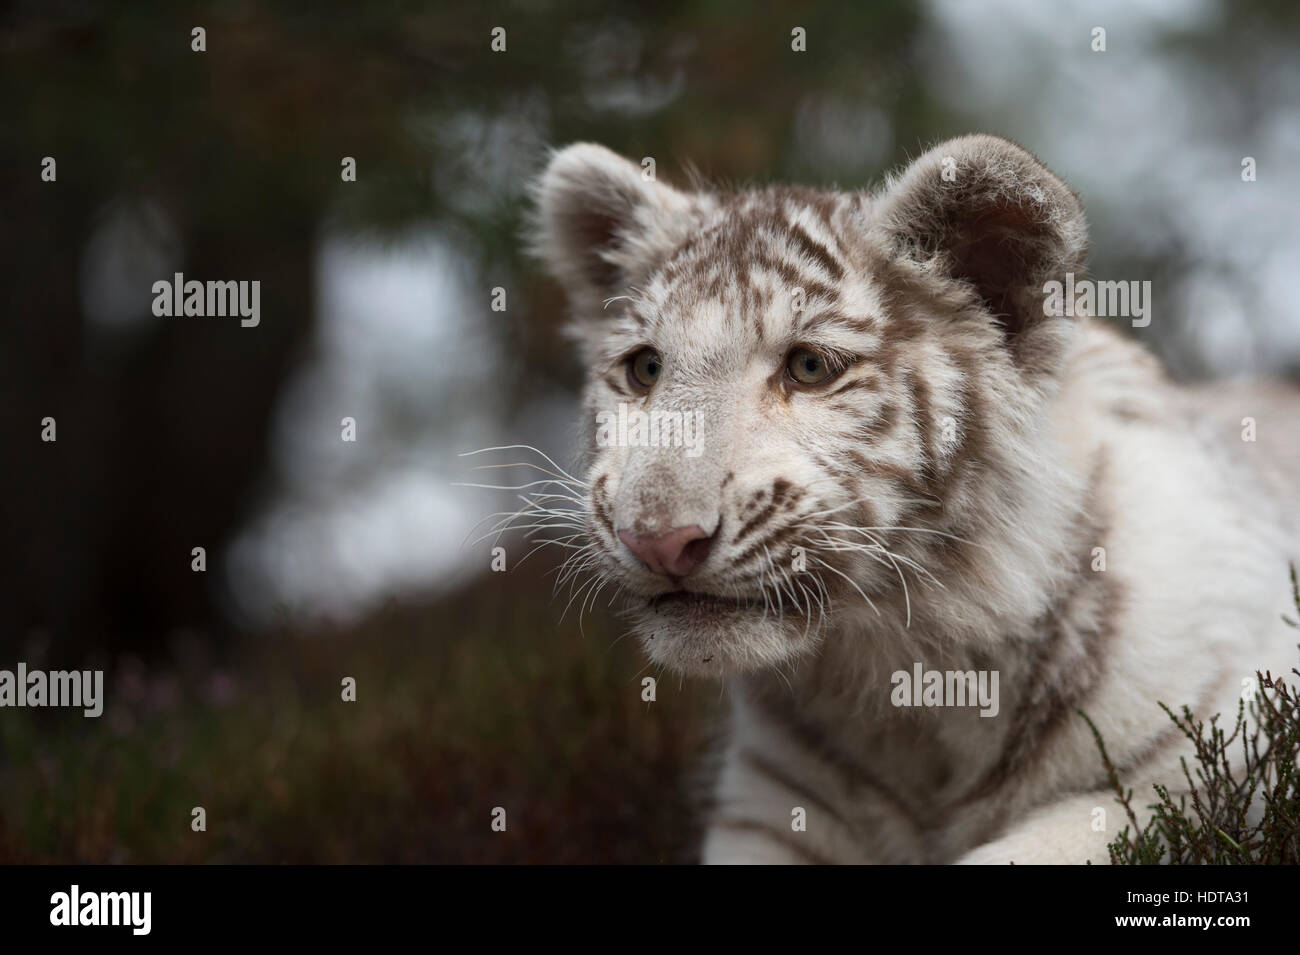 Royal tigre del Bengala / Koenigstiger ( Panthera tigris ), bianco morph, close-up, headshot, sembra furbo, Gizmo, ma carino. Foto Stock